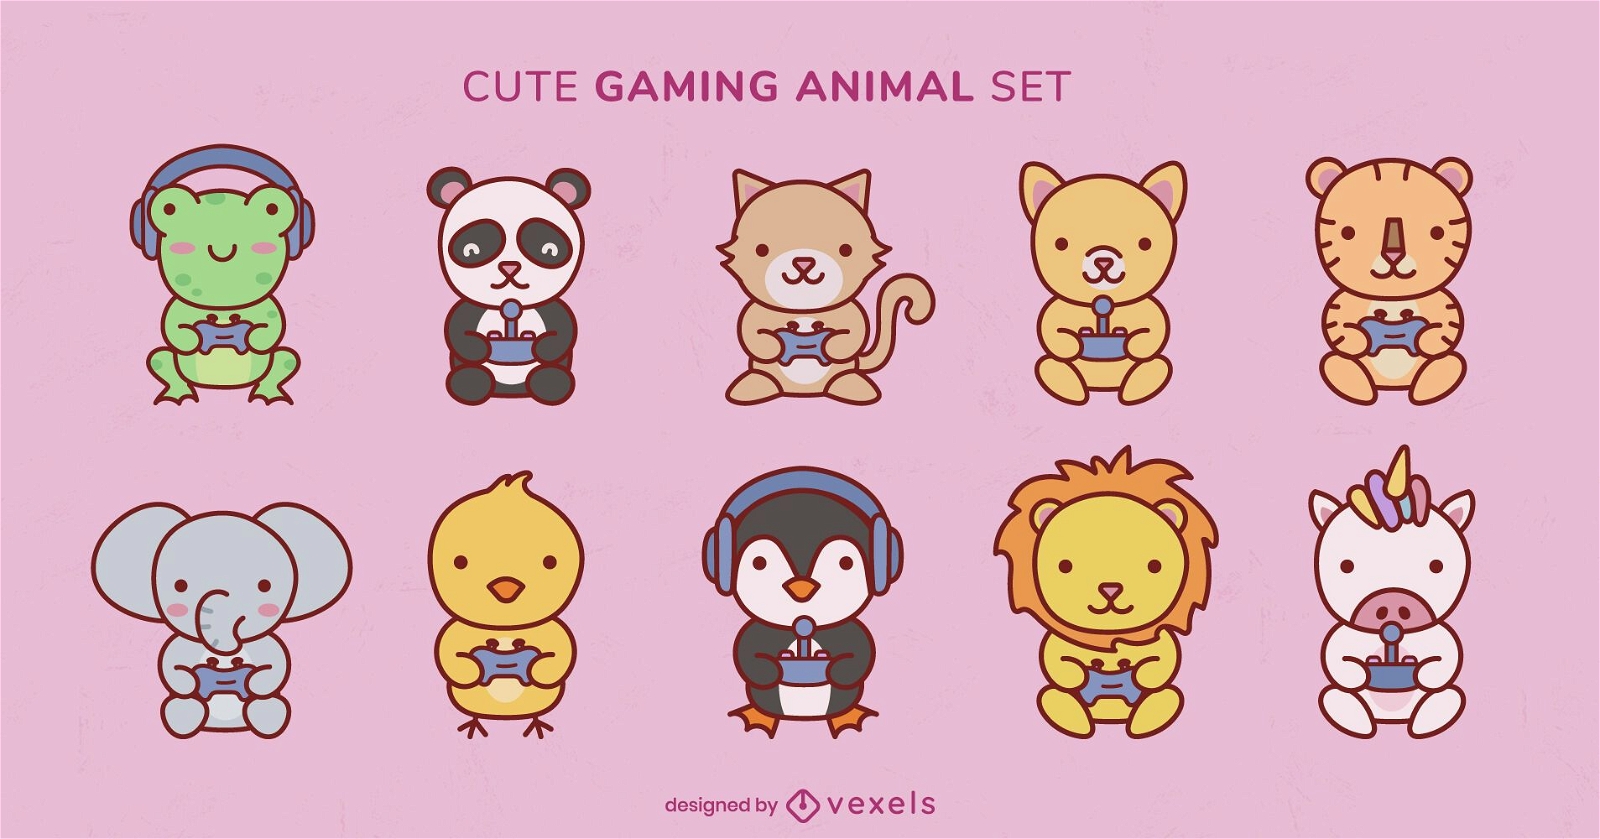 Cute wild animals gaming joystick set